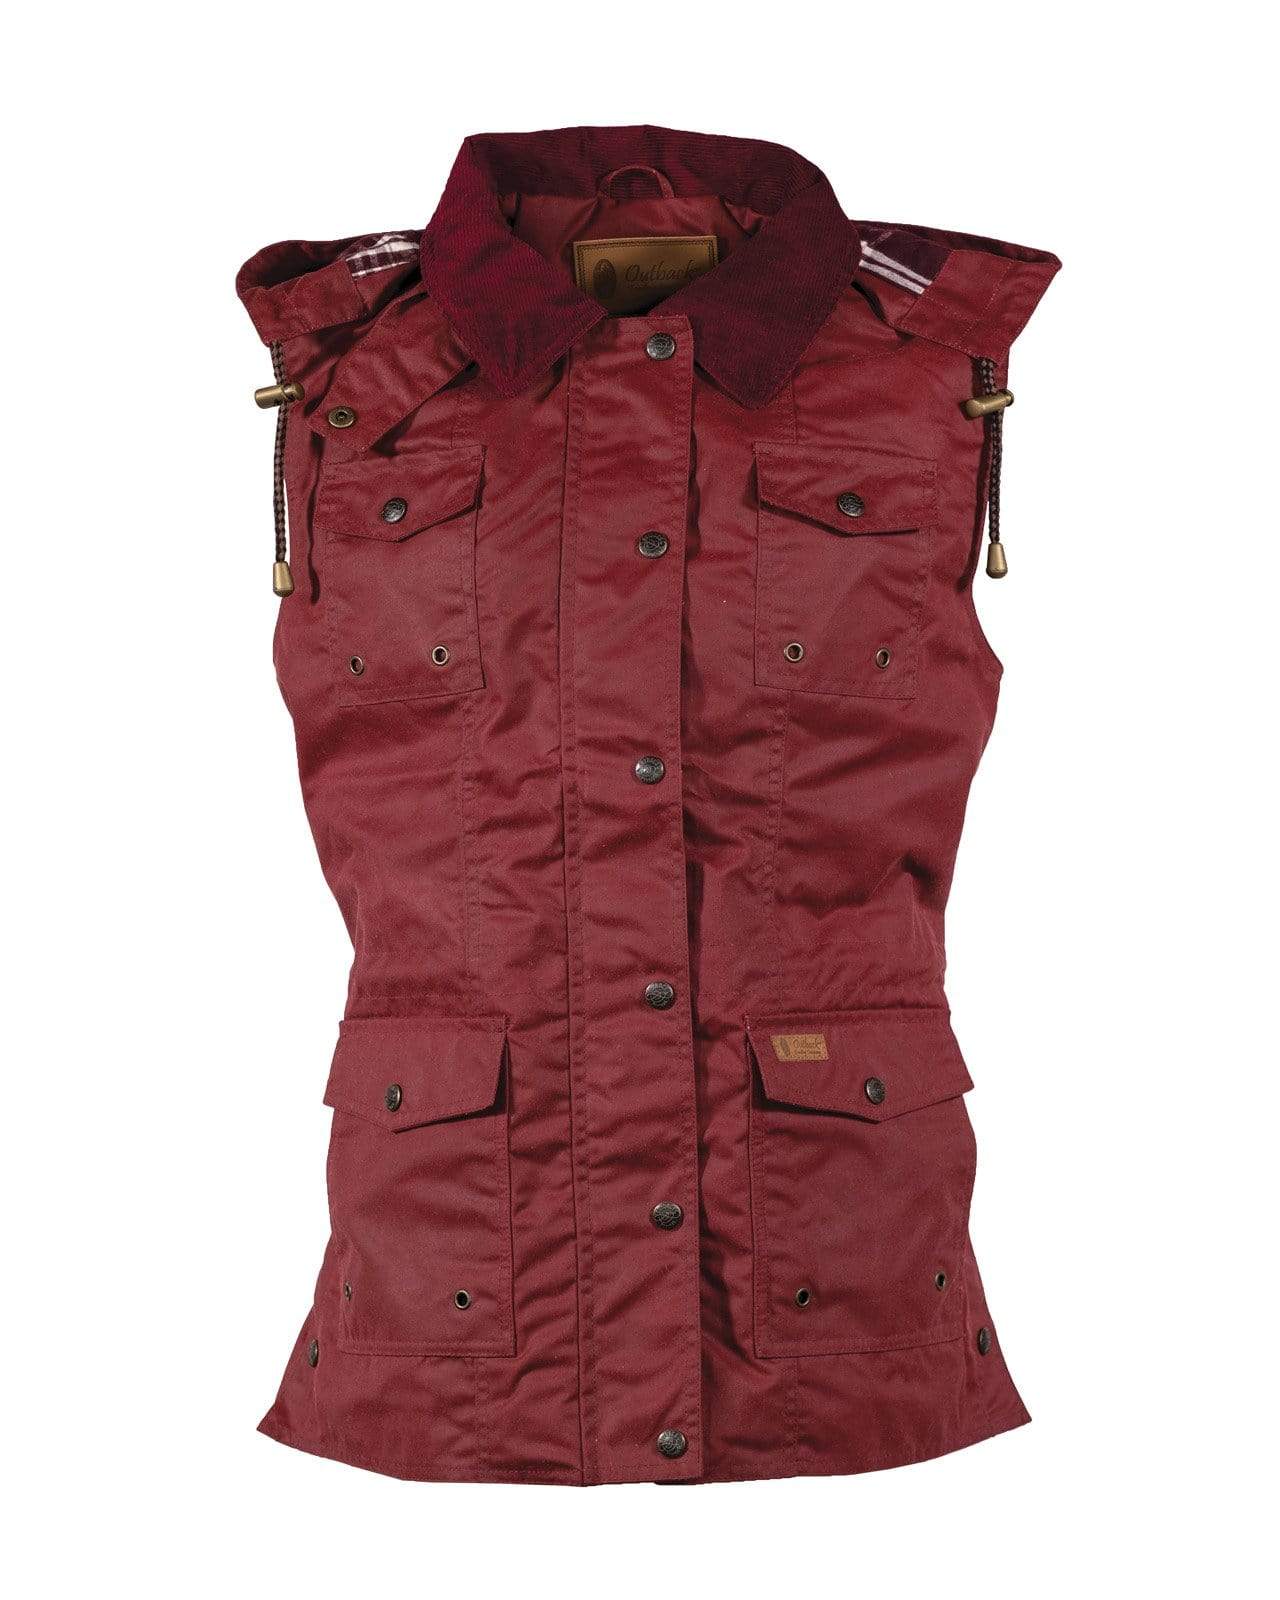 Outback Trading Company Women’s Jill-A-Roo Oilskin Vest Berry / S 29699-BRY-SM 789043386745 Vests